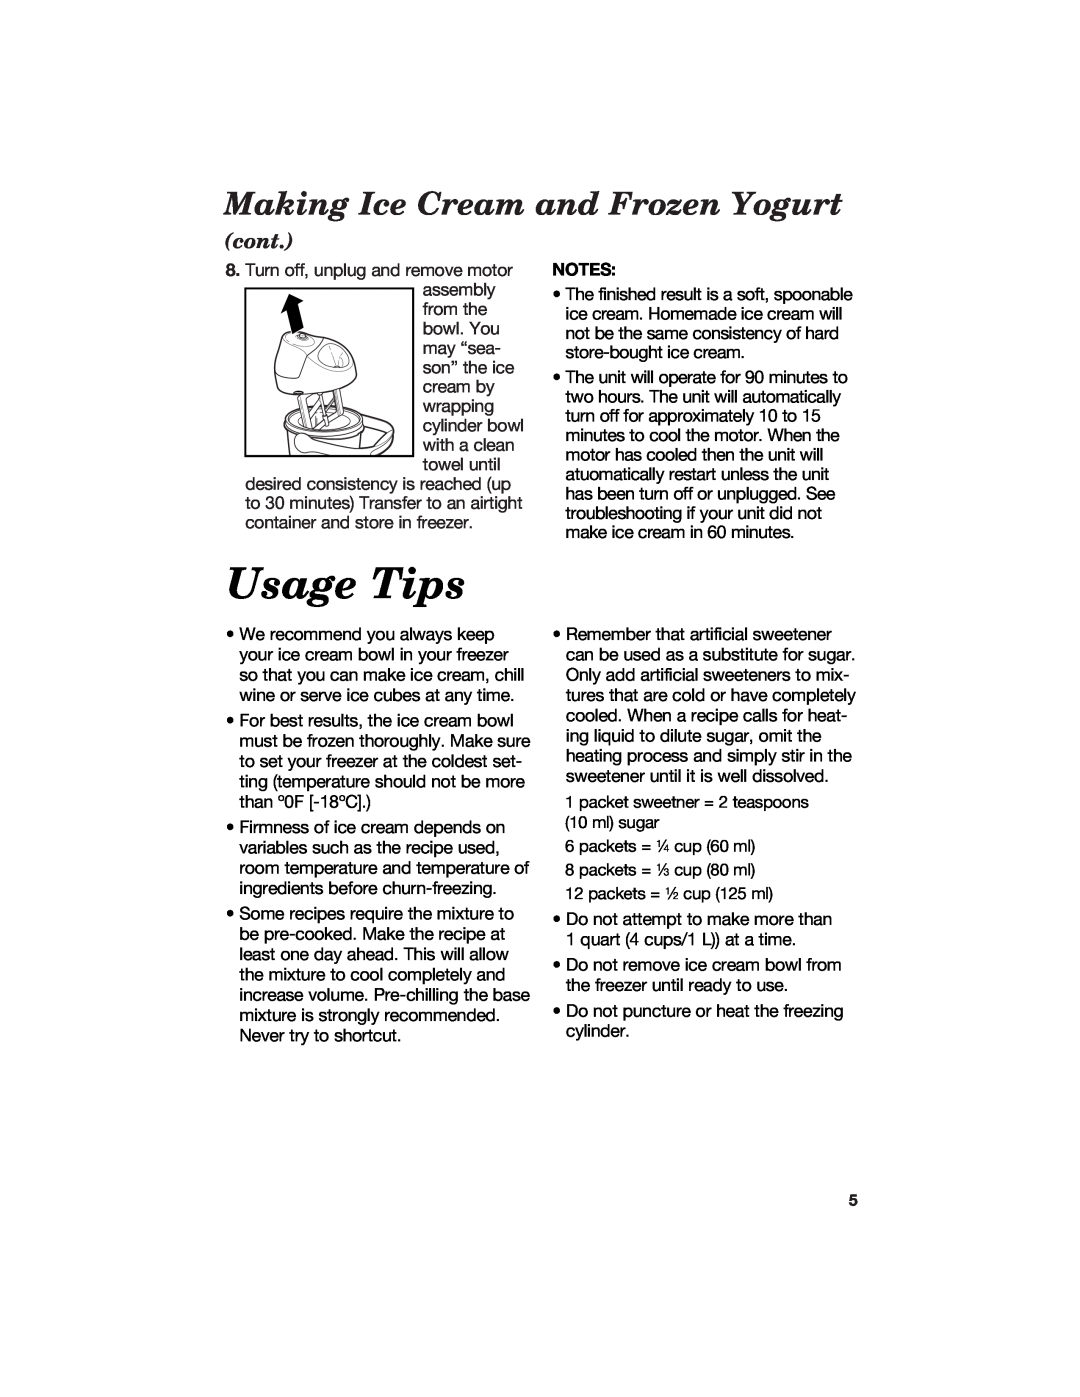 Hamilton Beach Ice Cream and Frozen Yogurt Maker manual Usage Tips, Making Ice Cream and Frozen Yogurt, cont 